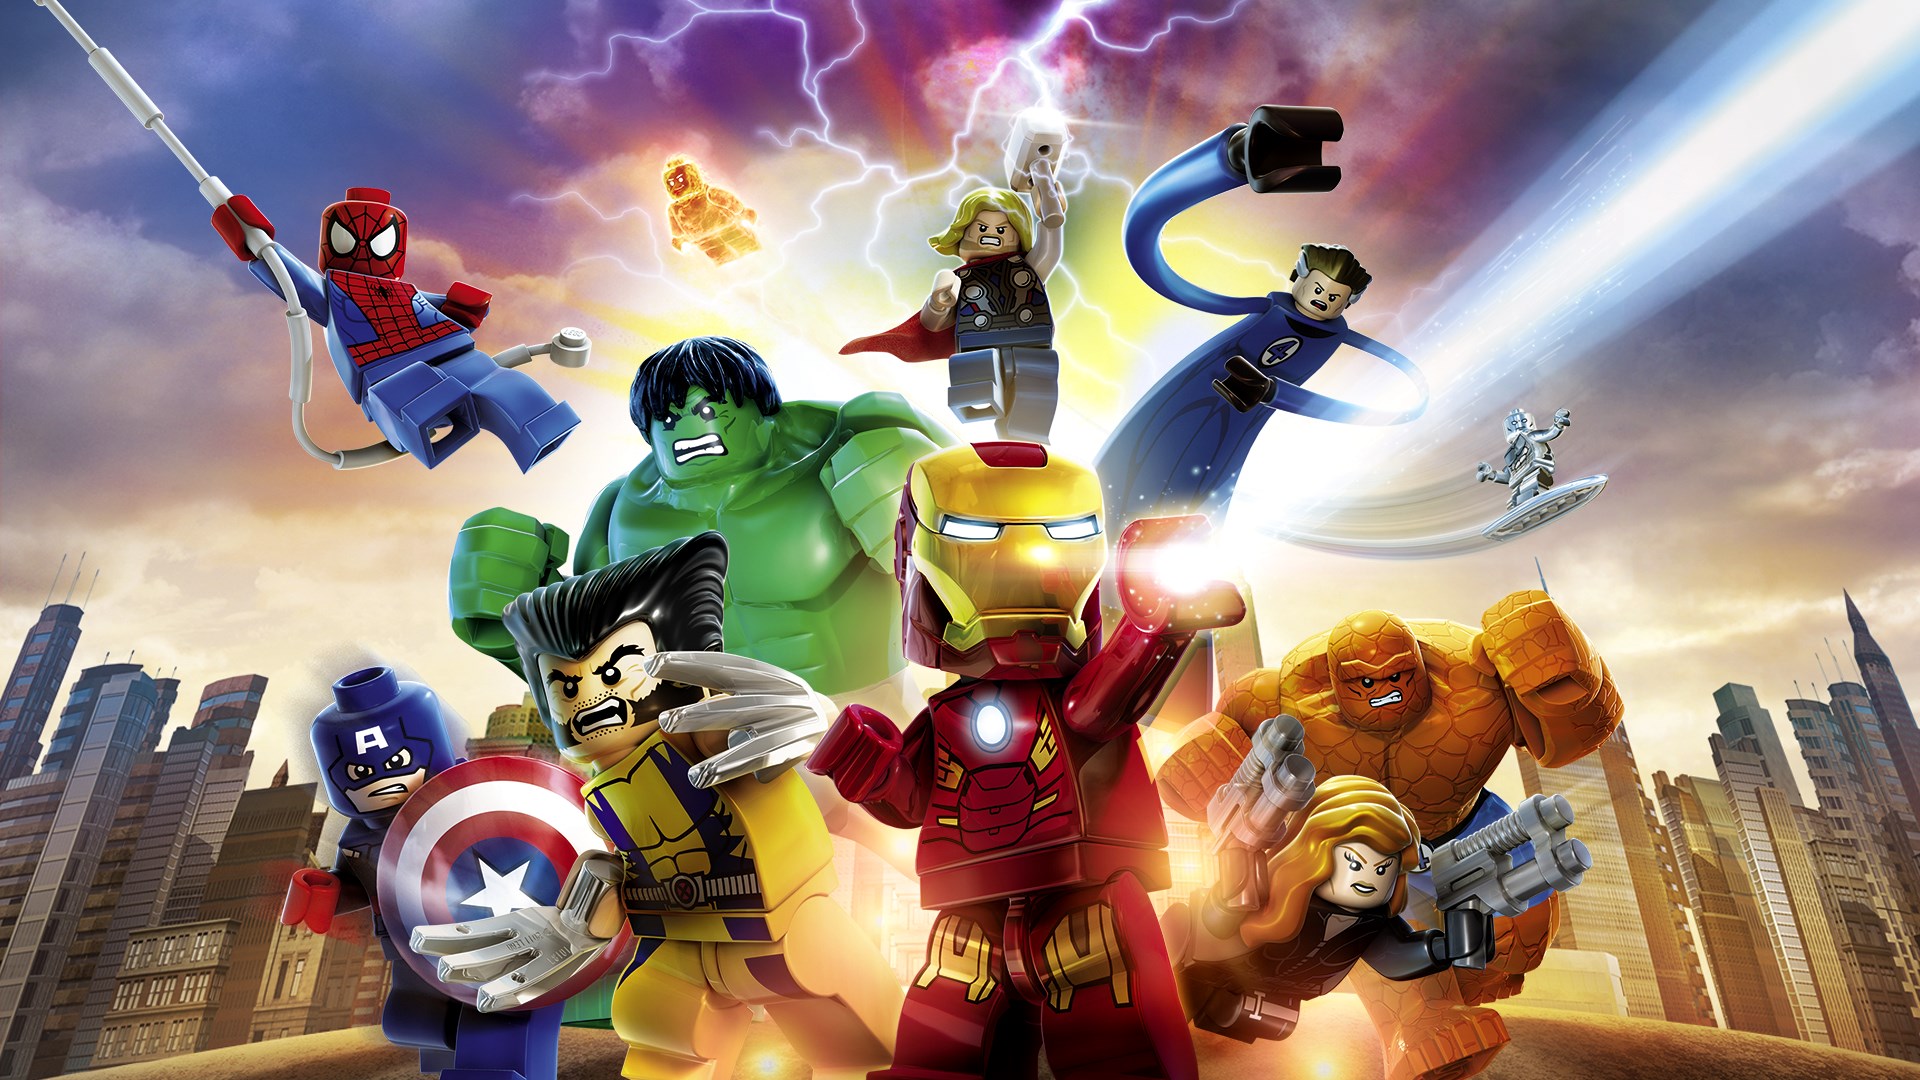 LEGO Marvel Super Heroes, Red Brick X10, Blocos Vermelhos do Deadpool